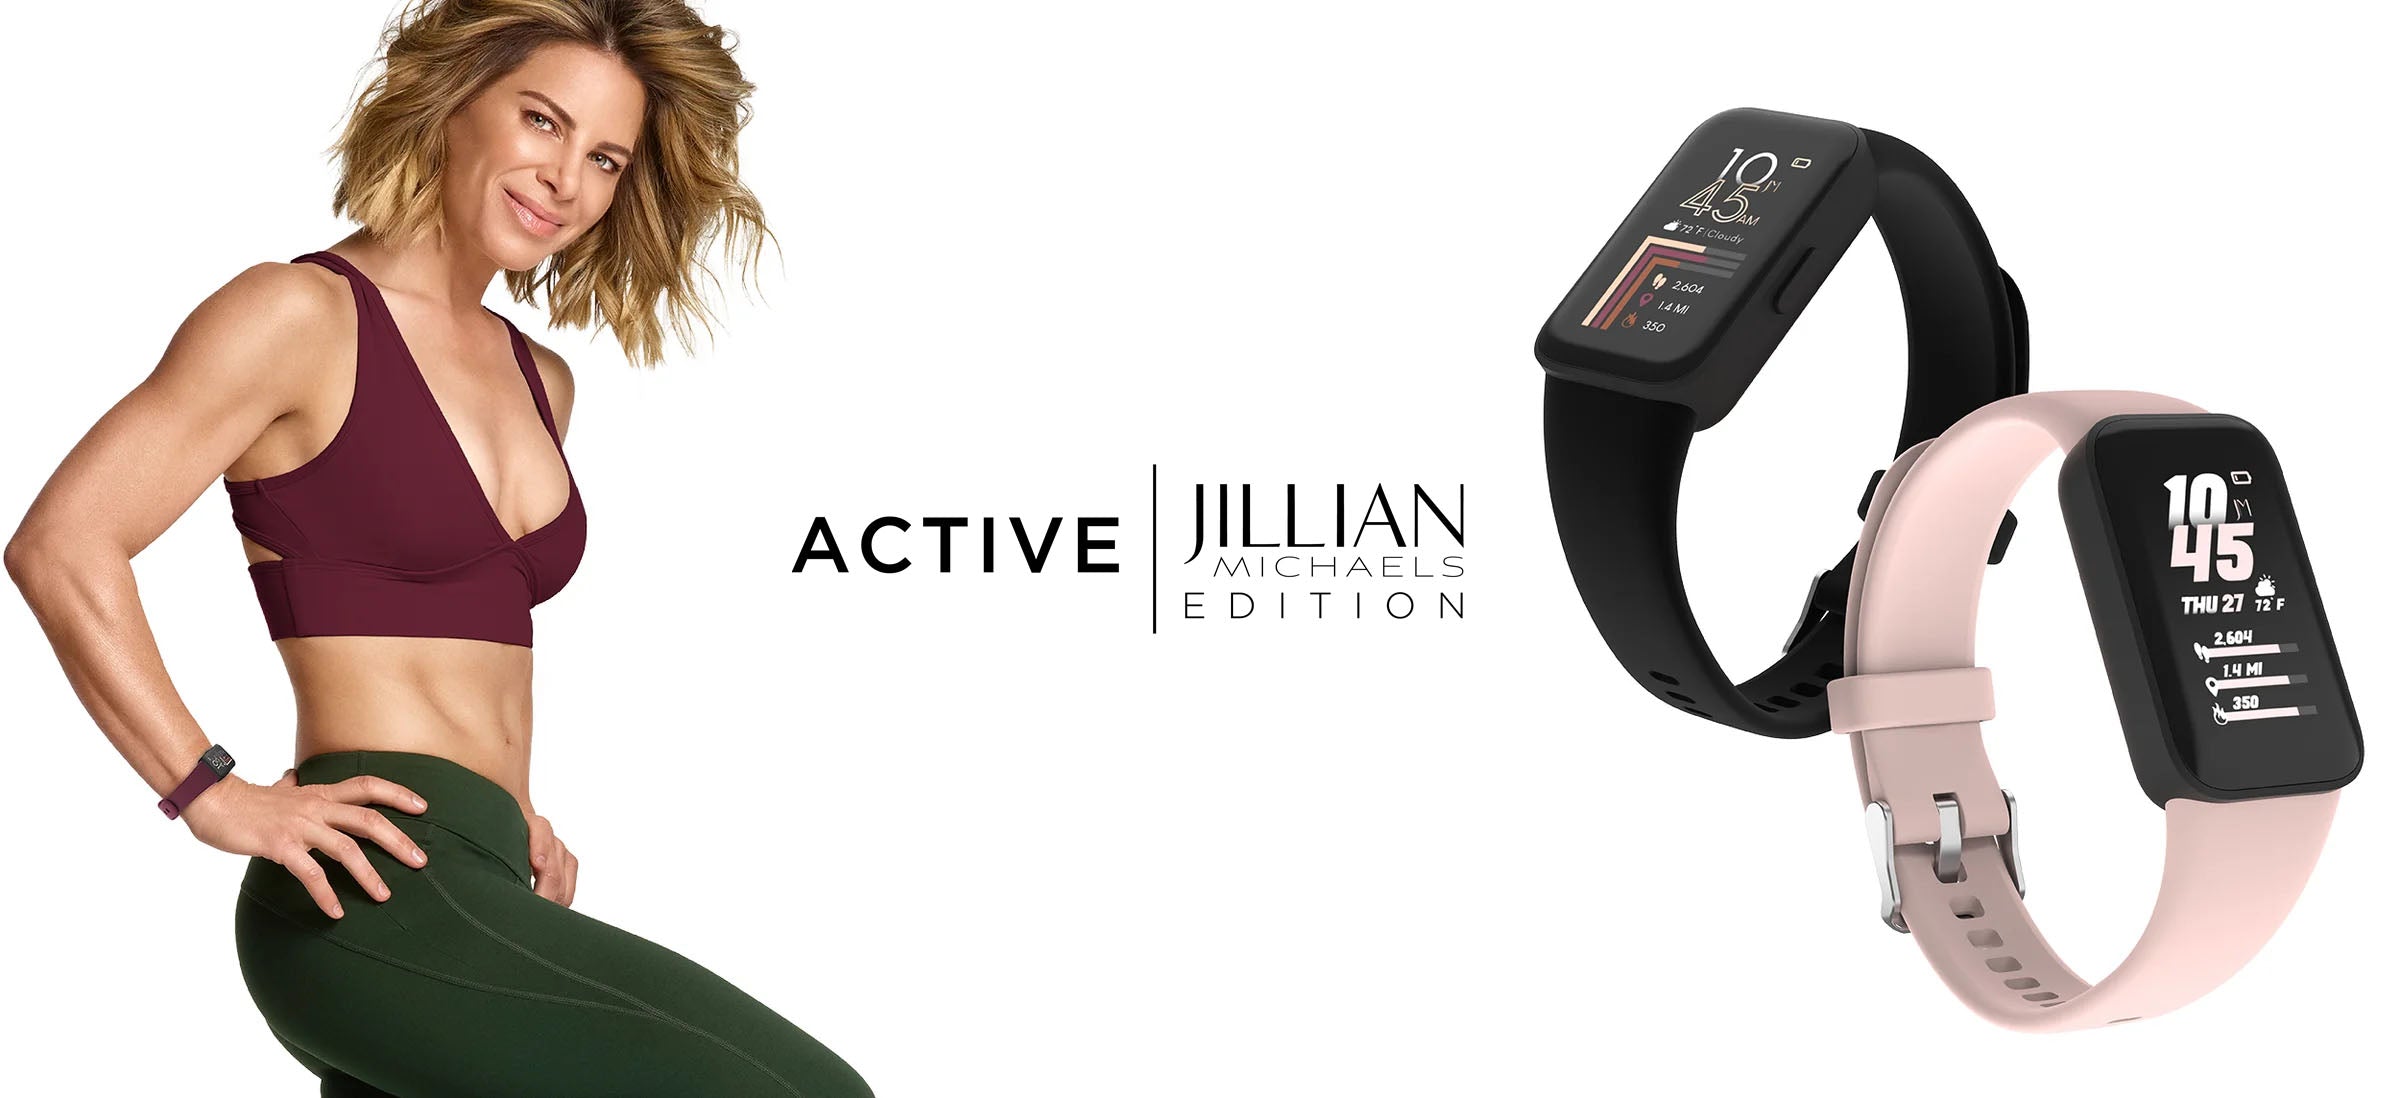 Active Jillian Michaels Edition